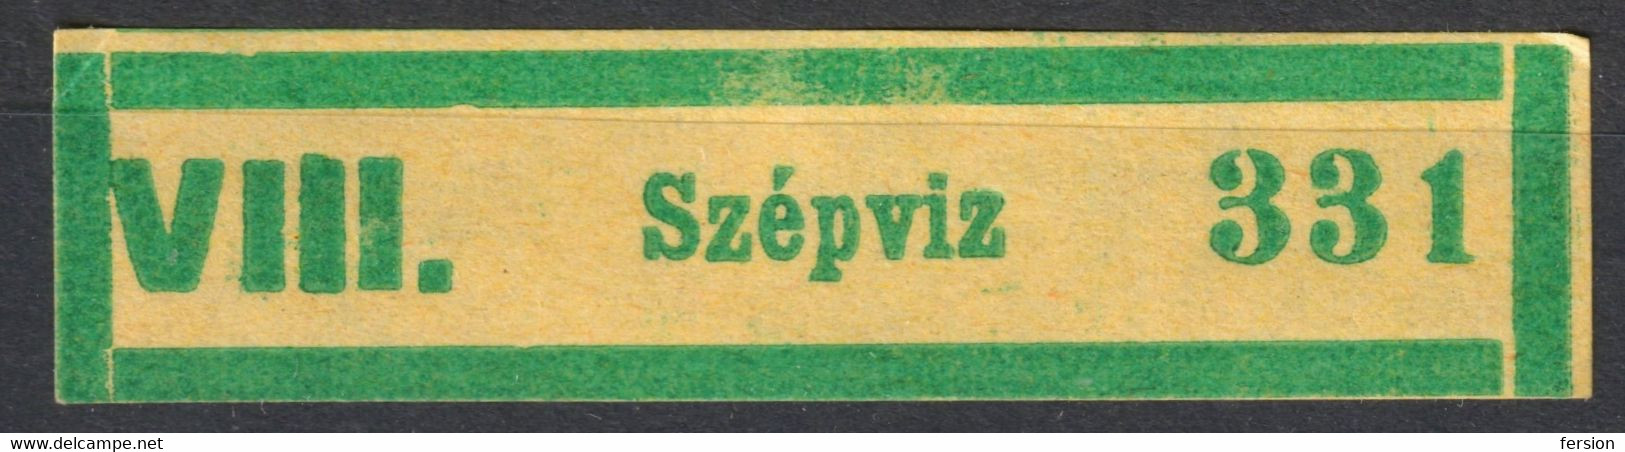 SZÉPVÍZ Frumoasa / Post Office Internal Registered Label Vignette - WW2 War HUNGARY Occupation ROMANIA Transylvania 1940 - Transylvania